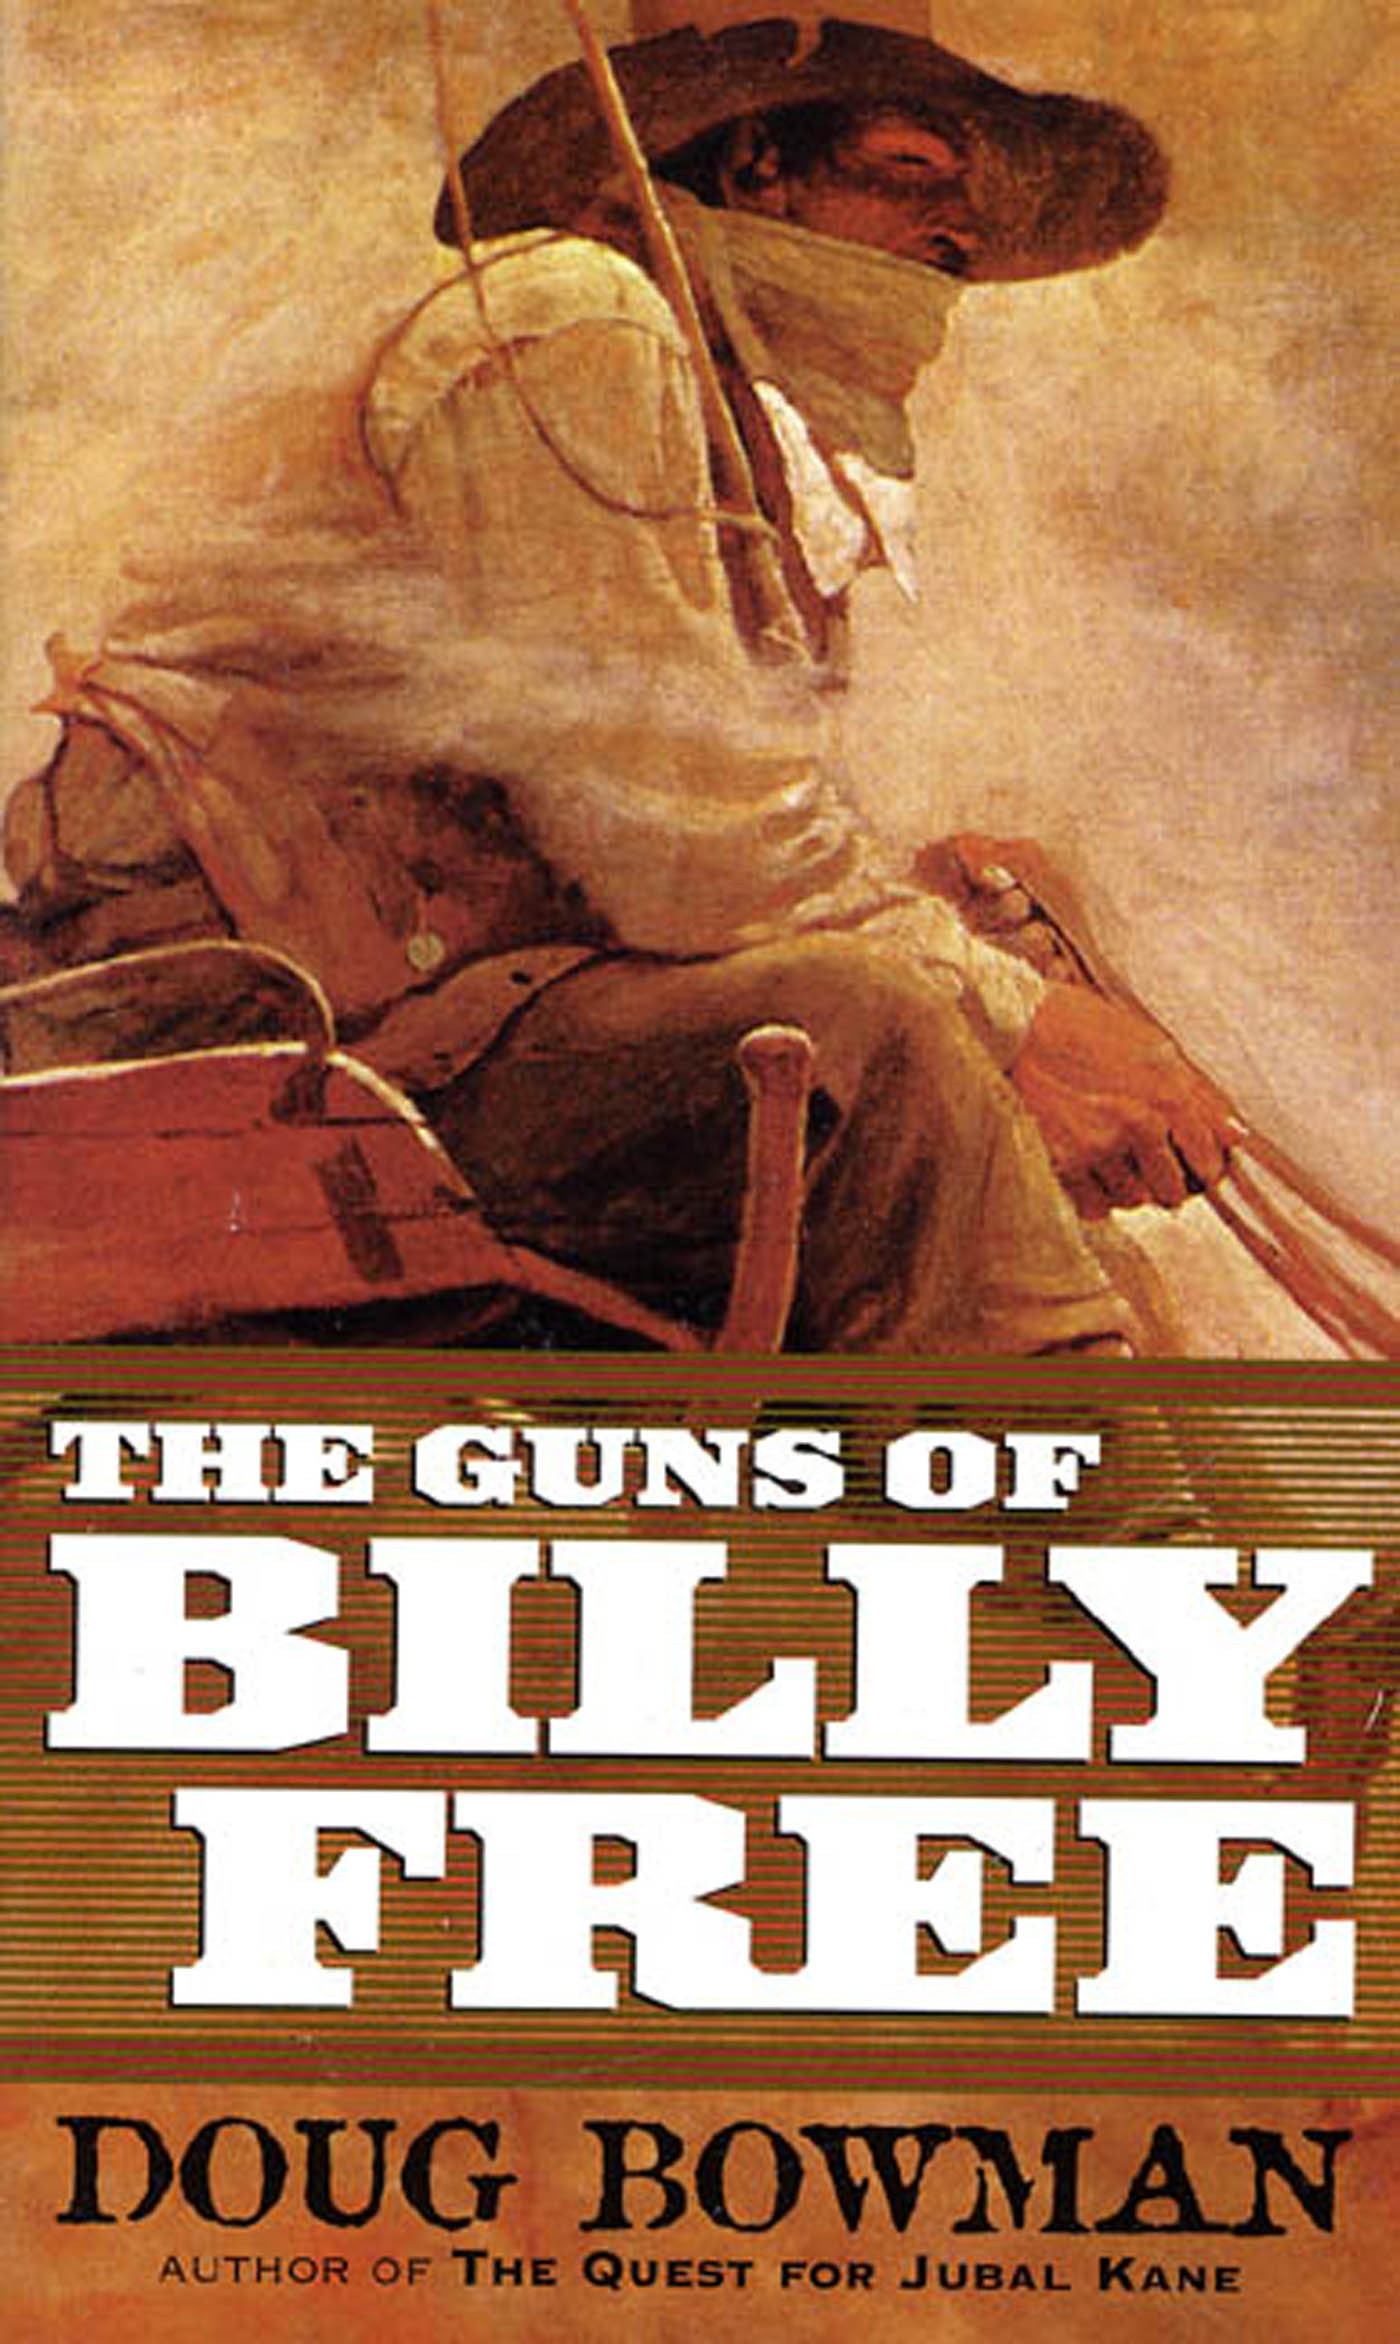 The Guns of Billy Free by Doug Bowman